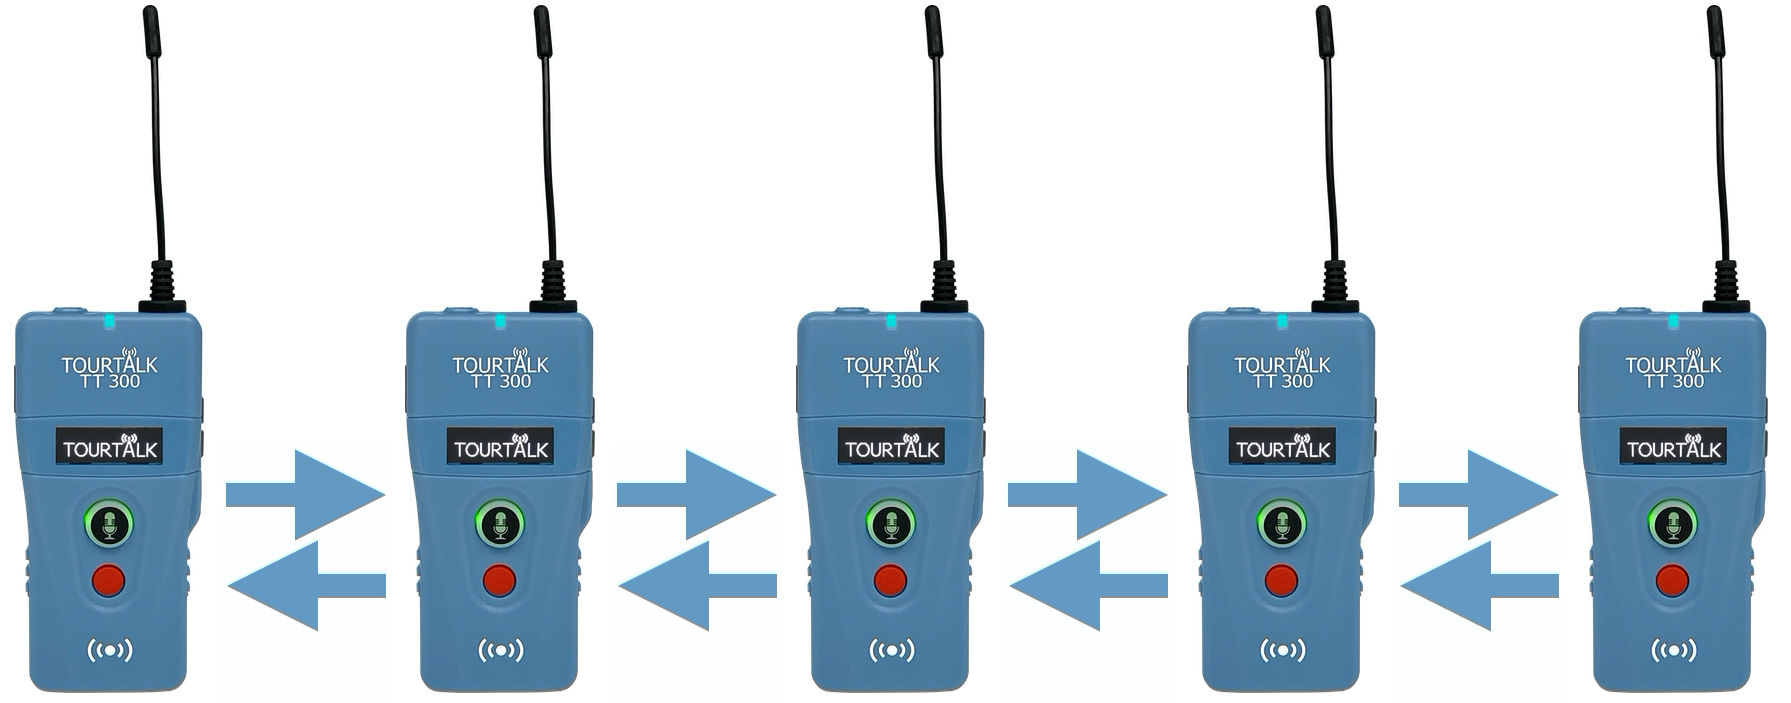 Tourtalk TT 300 five-way full-duplex communication system example